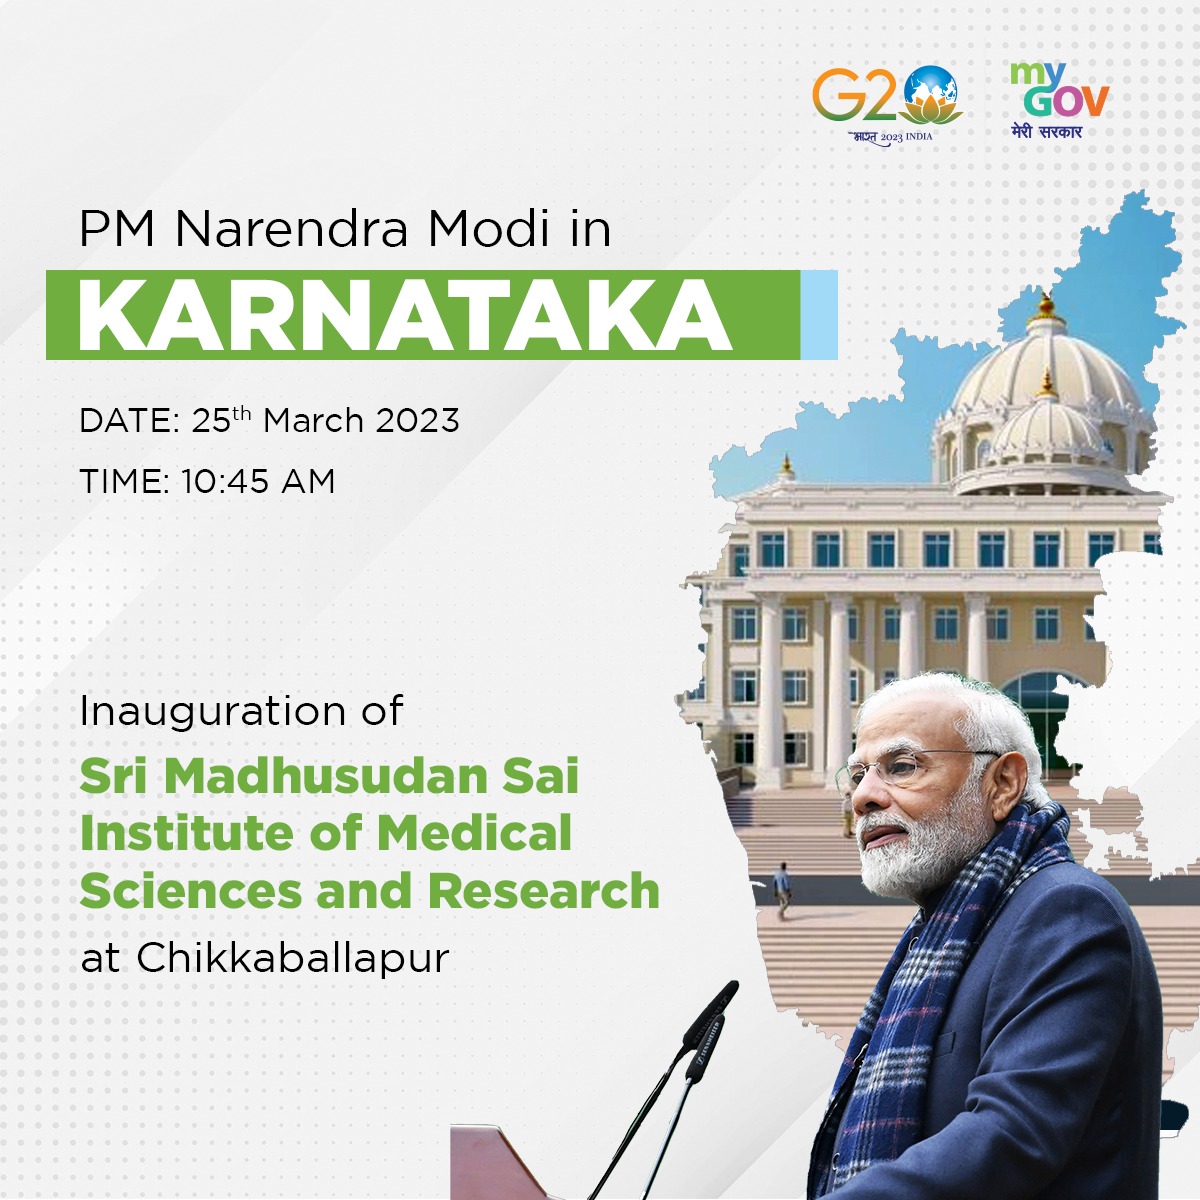 WATCH LIVE 

PM @narendramodi  to inaugurate Sri Madhusudan Sai Institute of Medical Sciences and Research in Karnataka

📹: youtube.com/live/RsuXJJ4s7…
#karnataka #chikkaballapura #srimadhusudansai
#SriMadhusudanSaiInstituteofMedicalSciencesandResearch #bengaluru 
@BSBommai